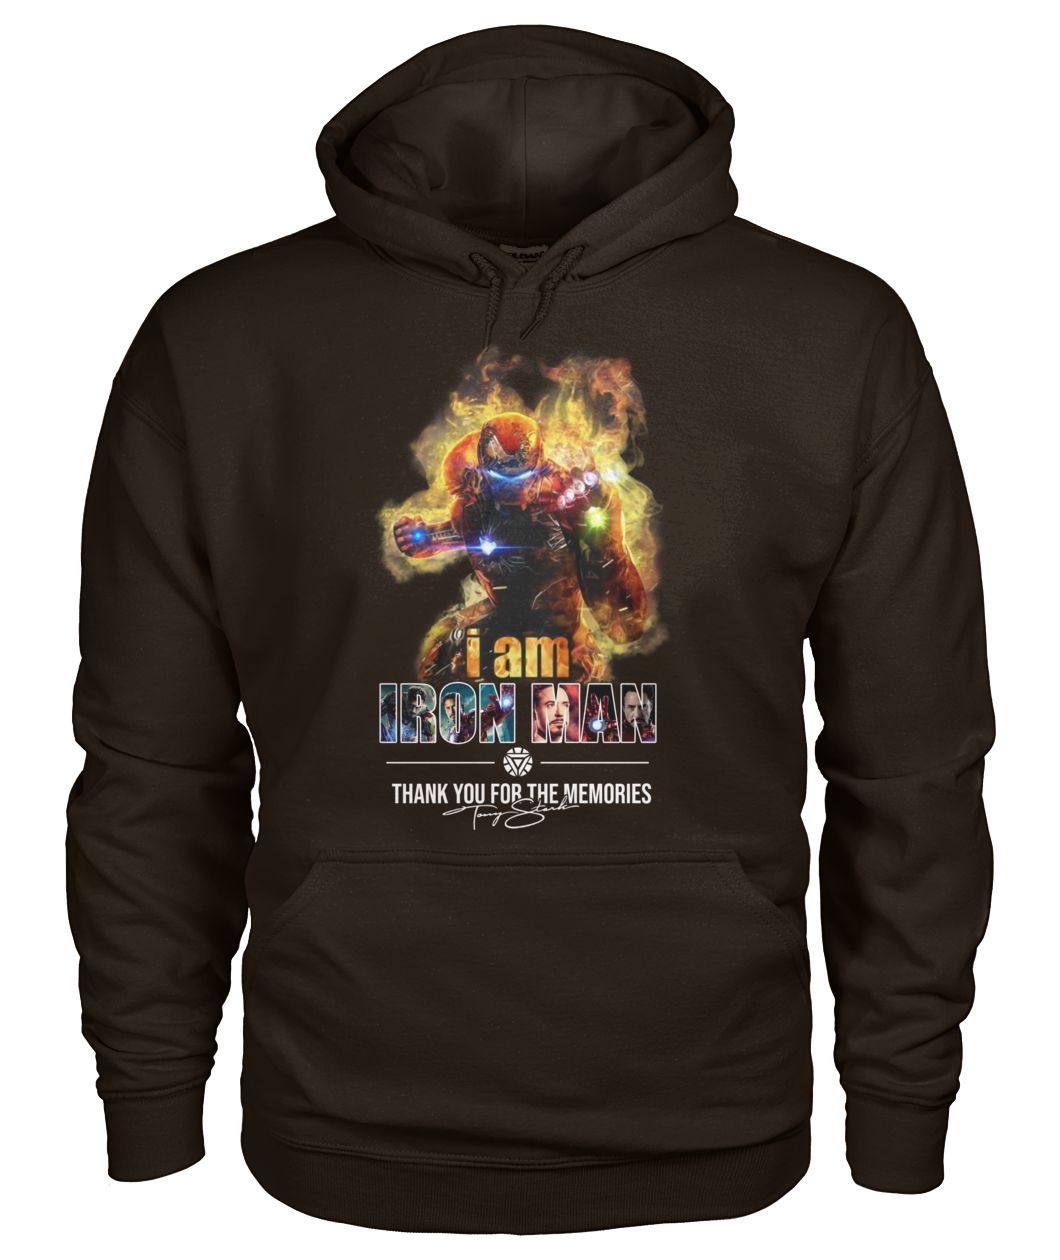 Marvel avengers endgame I am Iron man thank you for the memories gildan hoodie